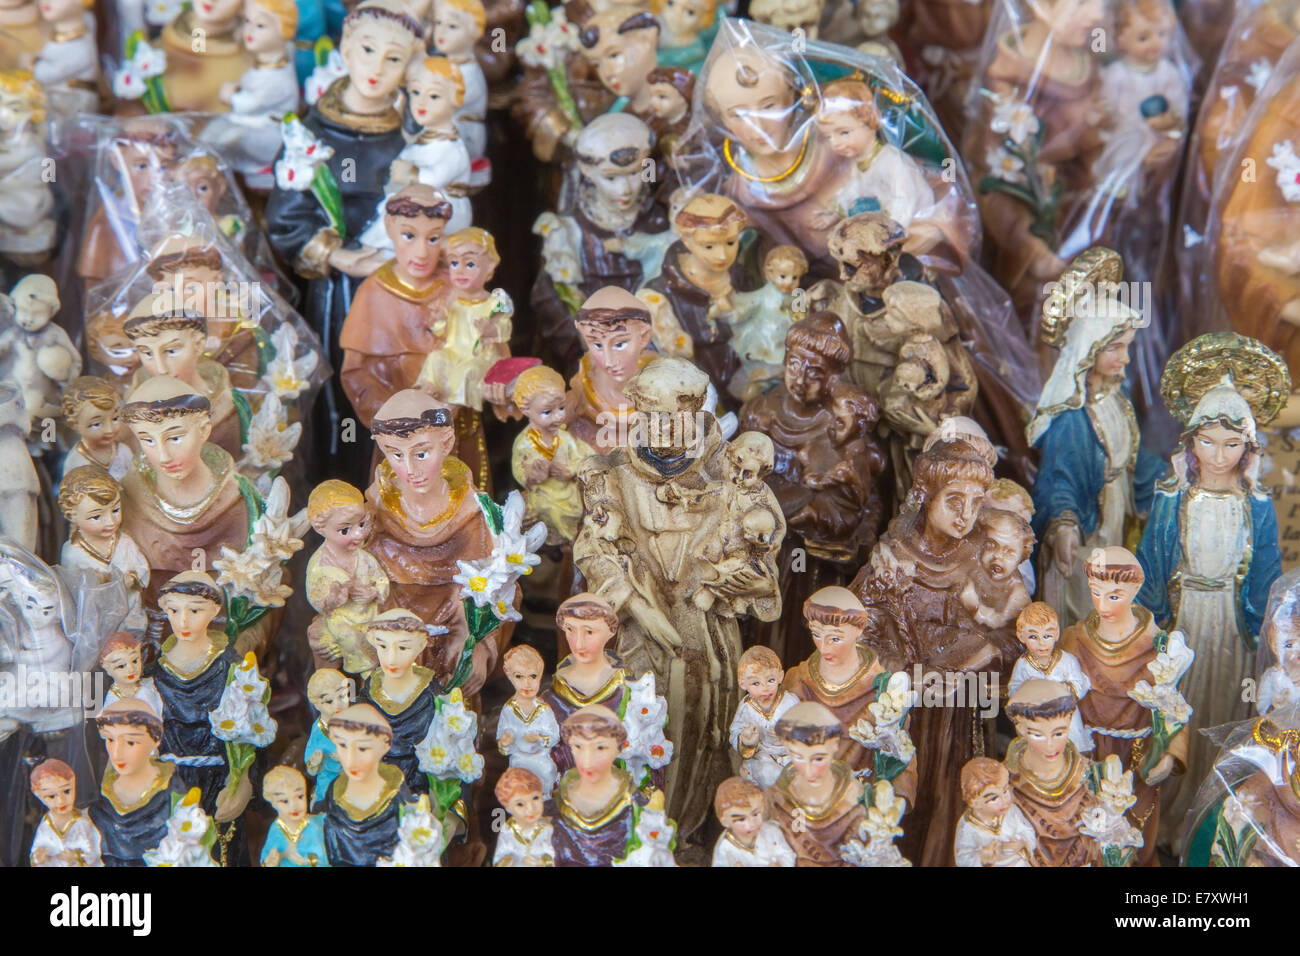 PADUA, Italien - 10. September 2014: Die Religion Souvenirs aus der Basilika des Hl. Antonius von Padua (Basilica del Santo). Stockfoto